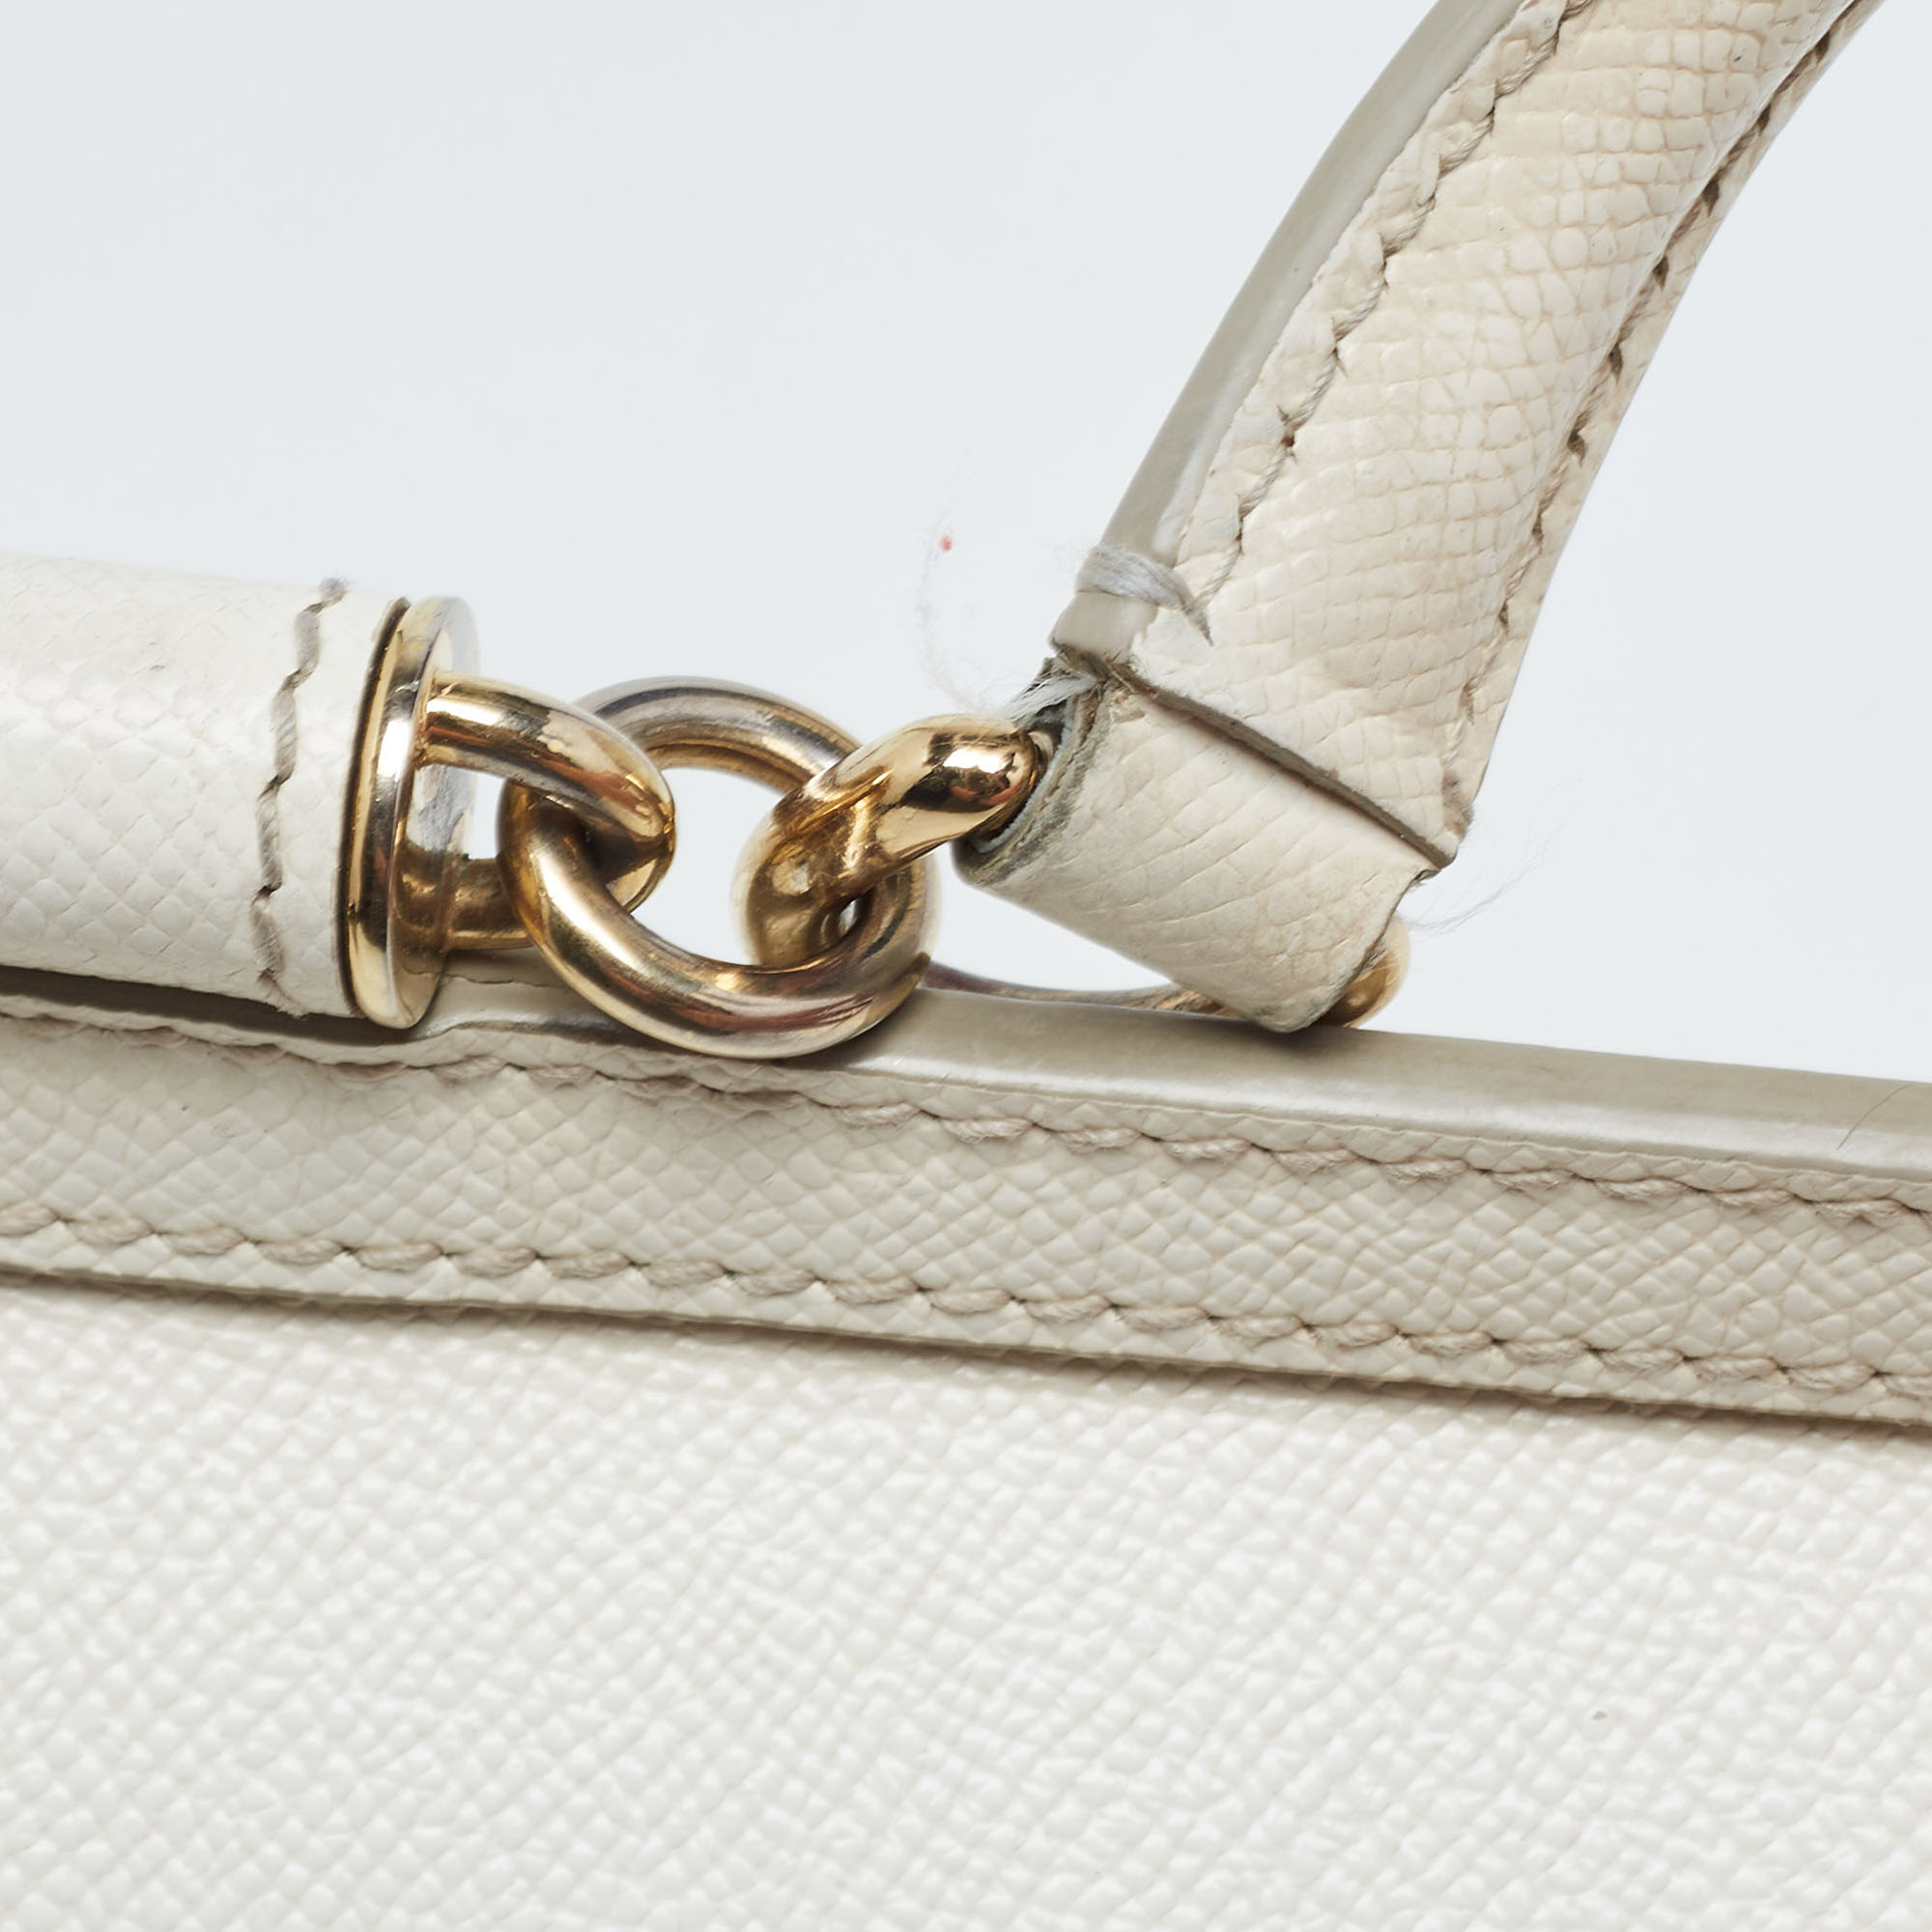 Dolce & Gabbana White Leather Medium Miss Sicily Top Handle Bag